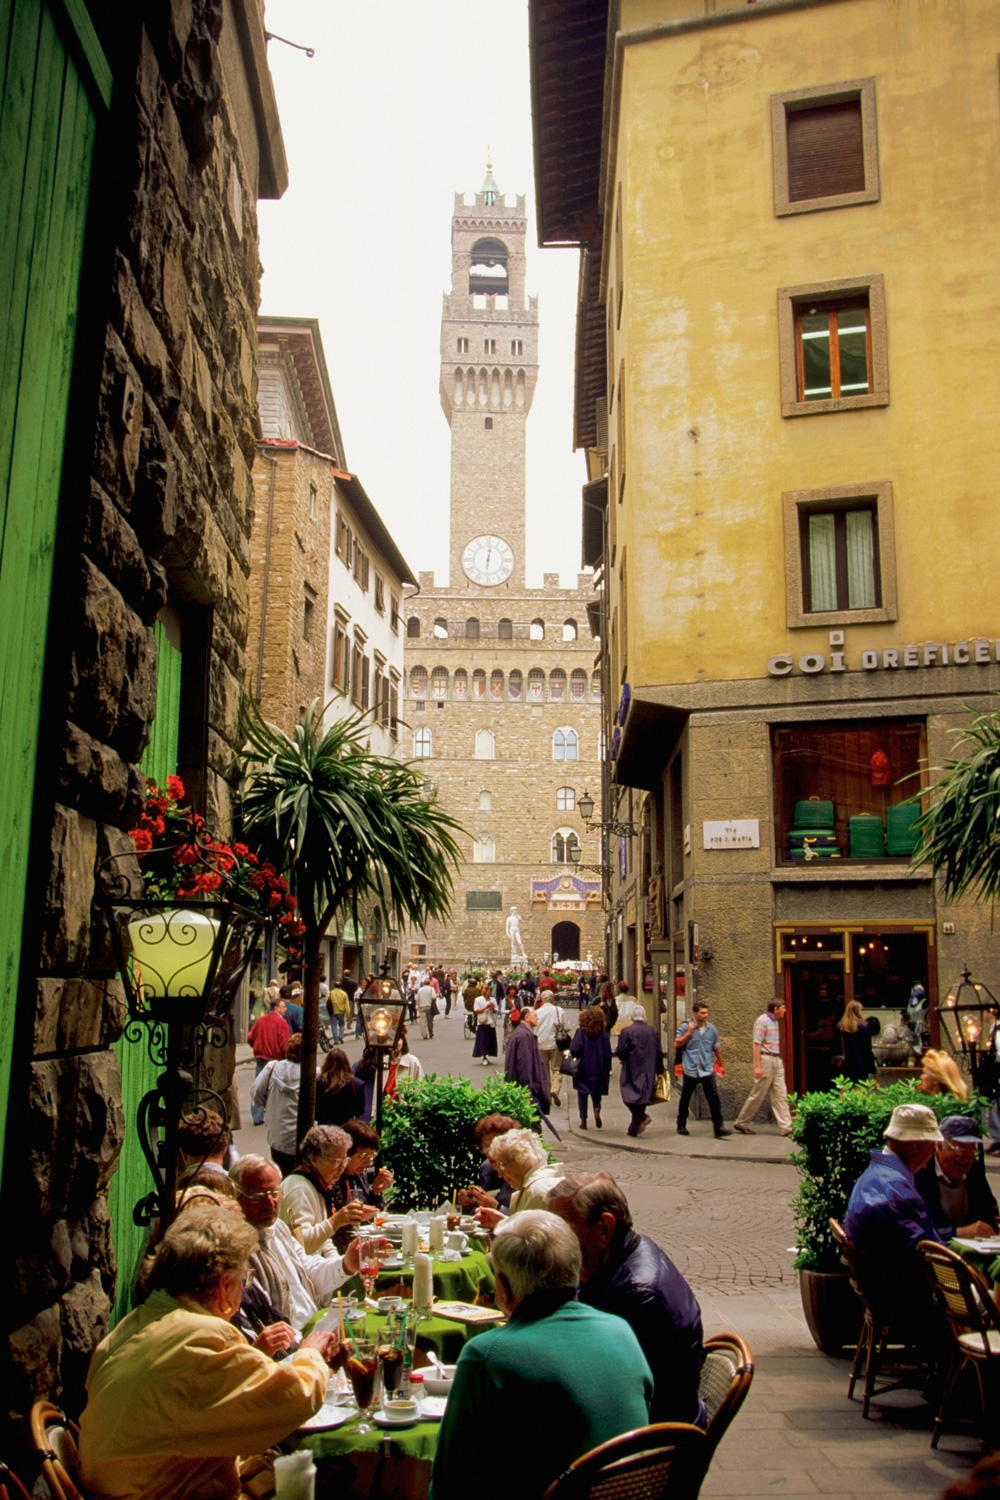 Tourists eating at sidewalk cafe, Palazzo Vecchio